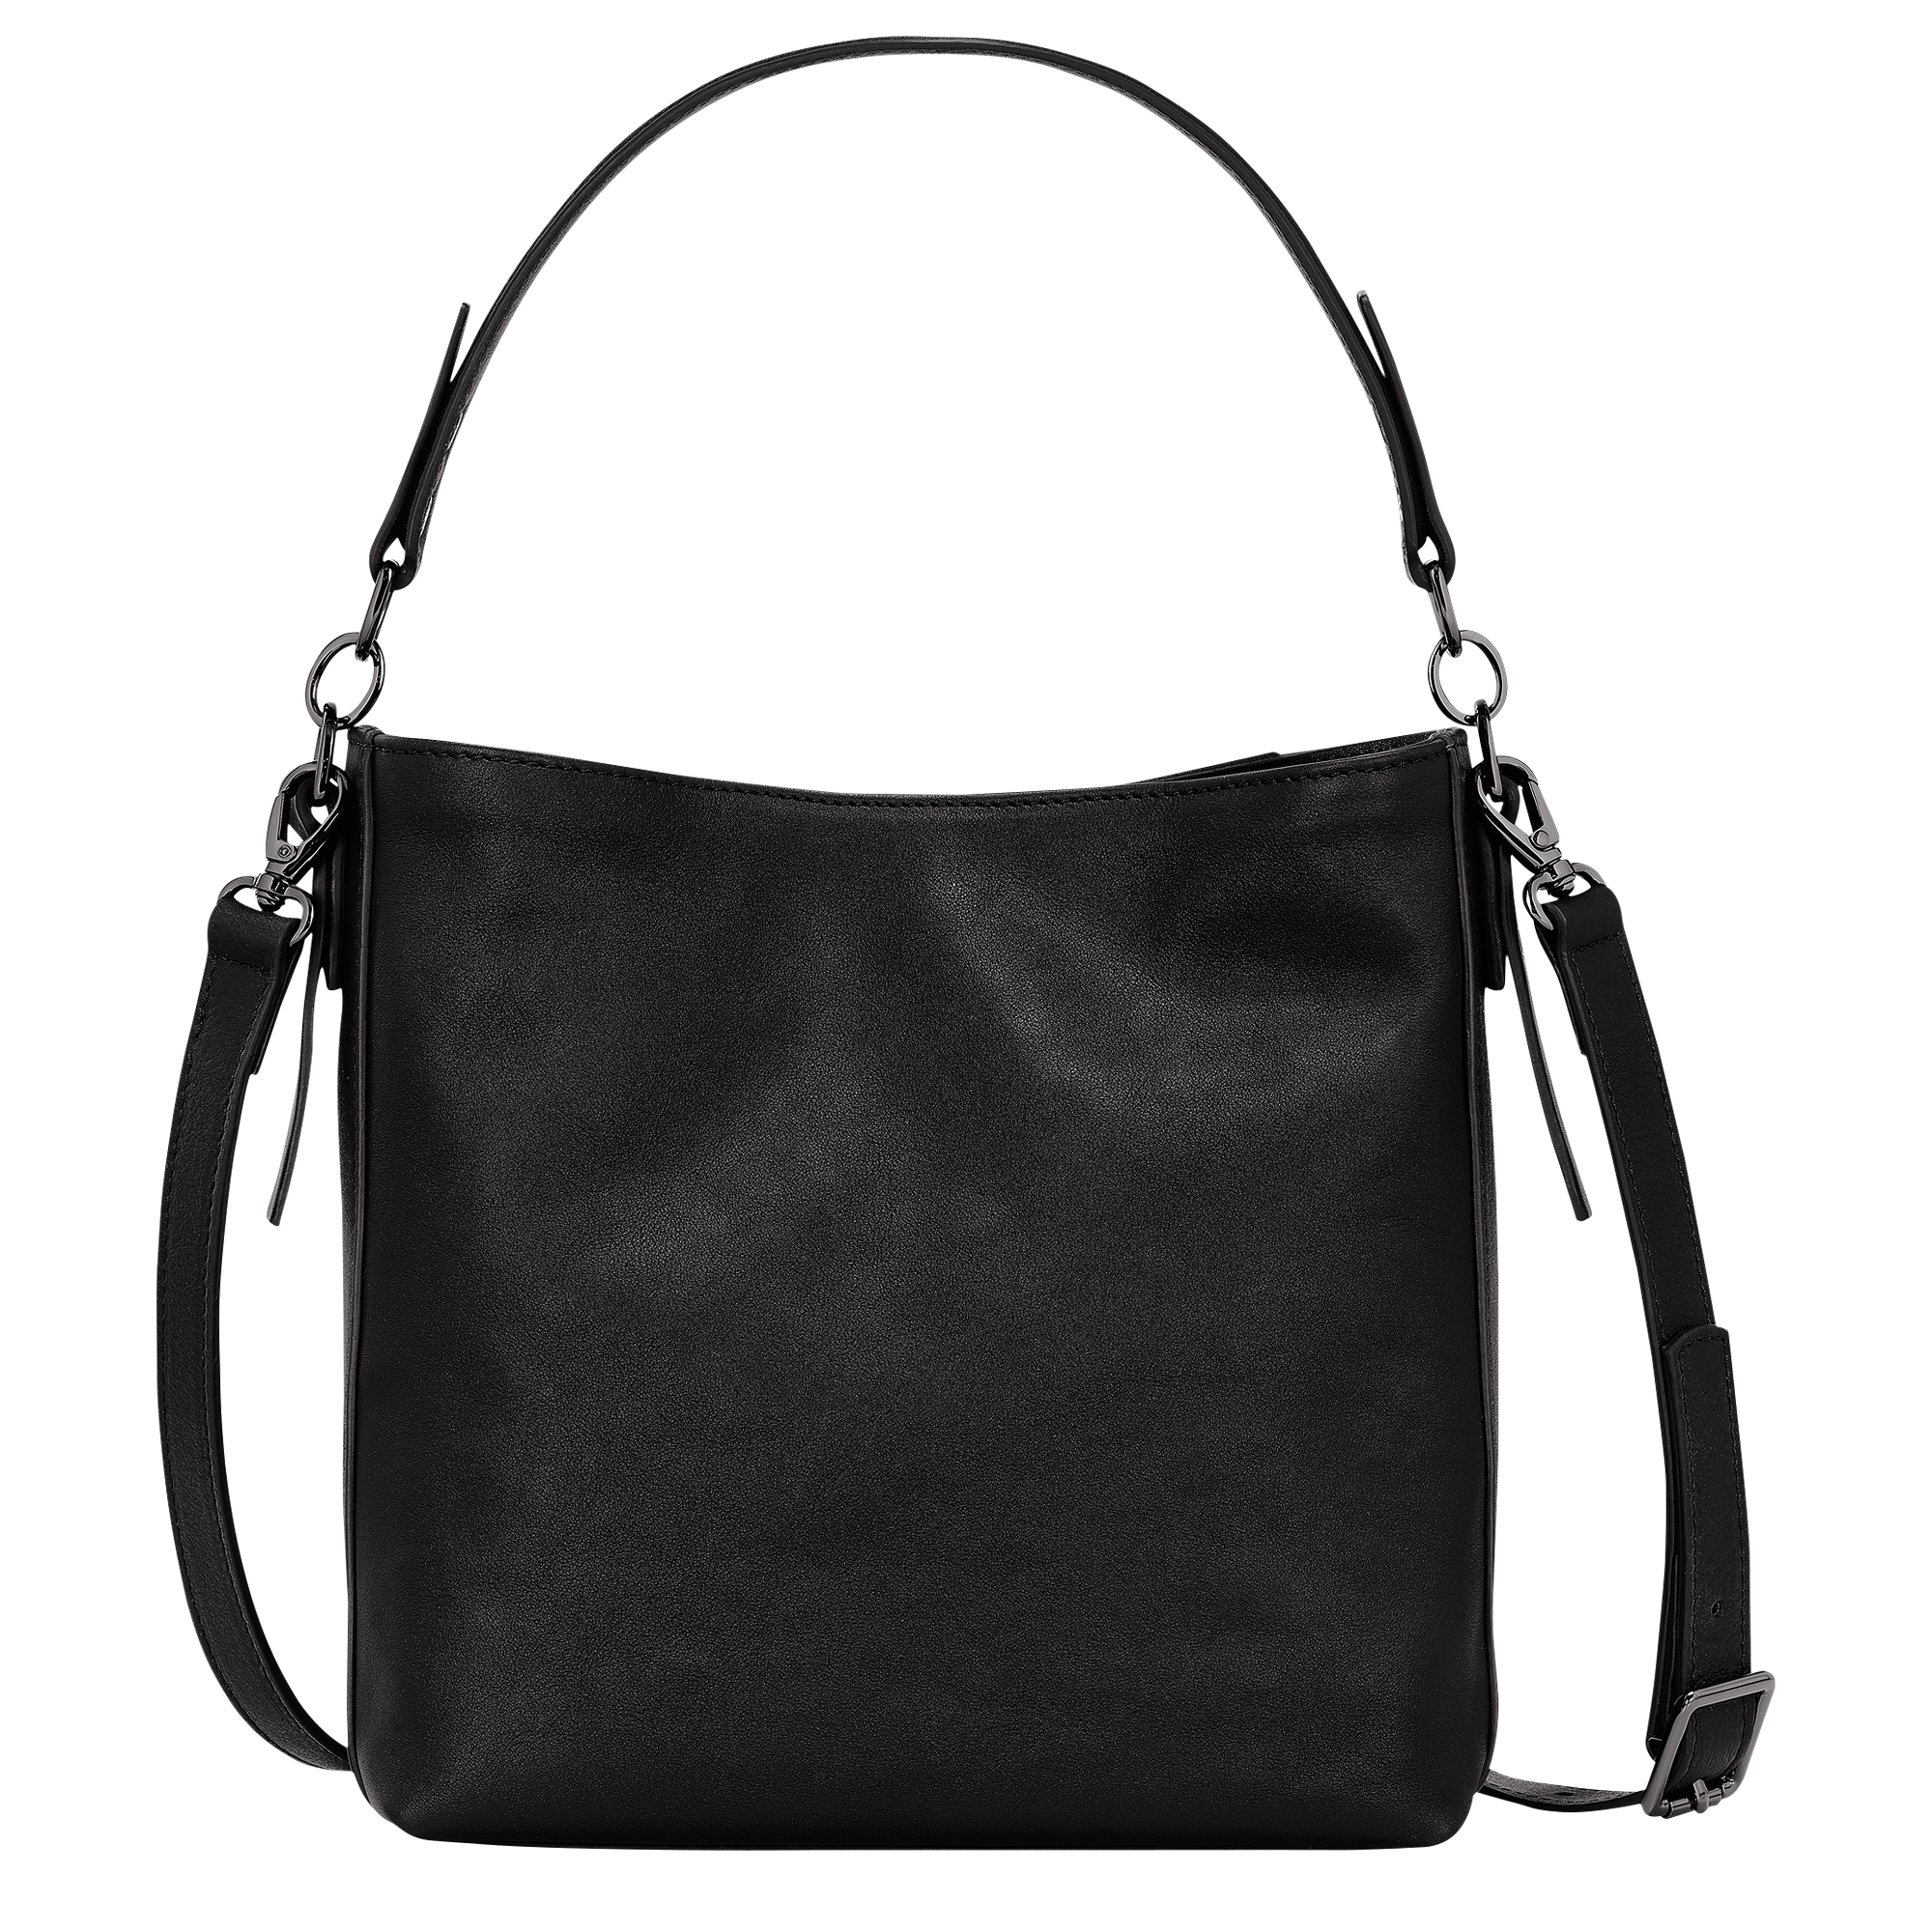 Longchamp 3D 斜背袋 S, 黑色